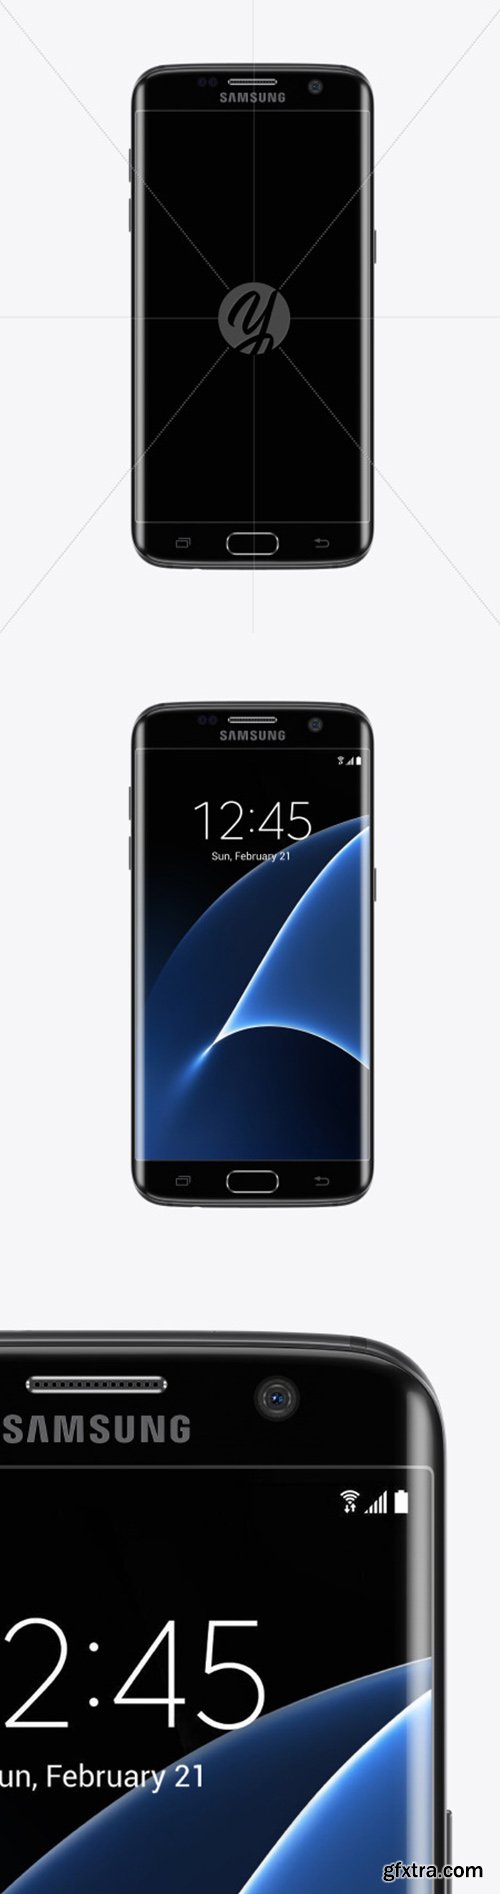 Black Onyx Samsung Galaxy S7 Phone Mockup 52110